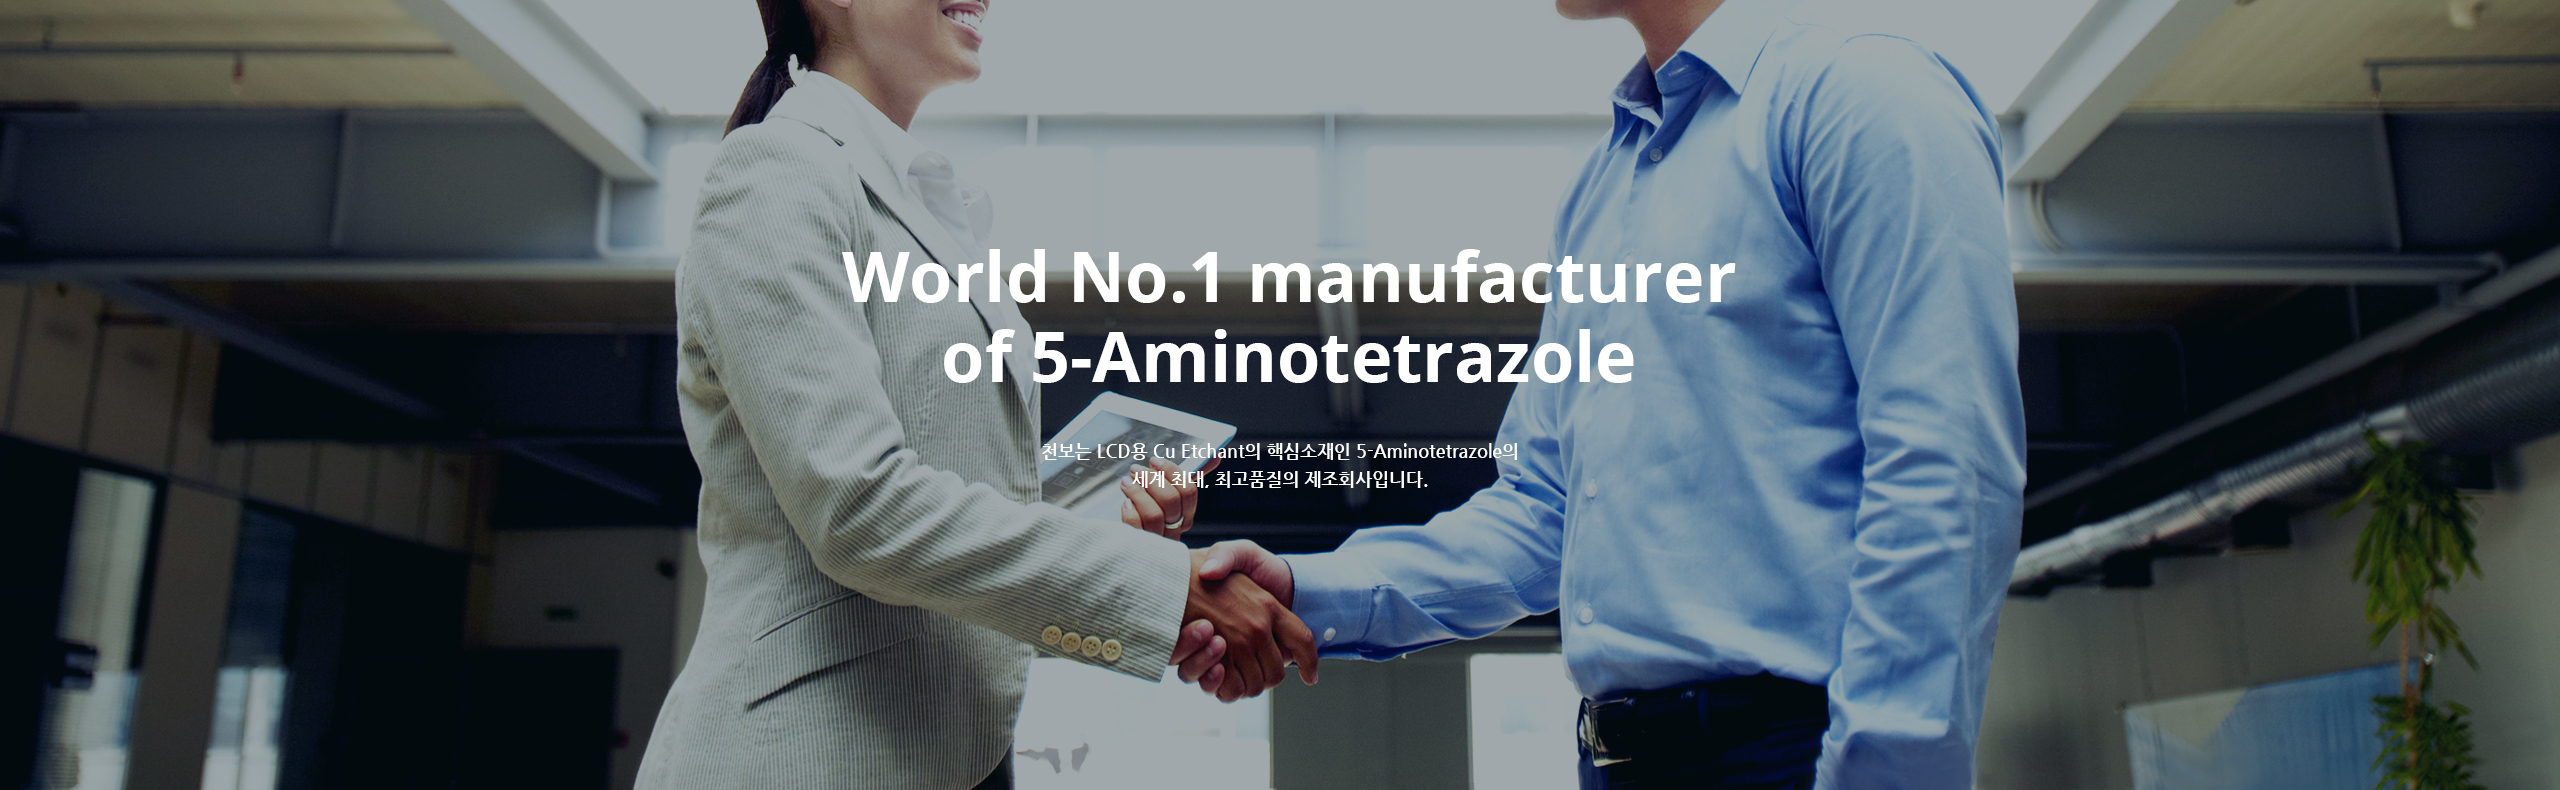 world No1 manufacturer of 5-Aminotertrazole